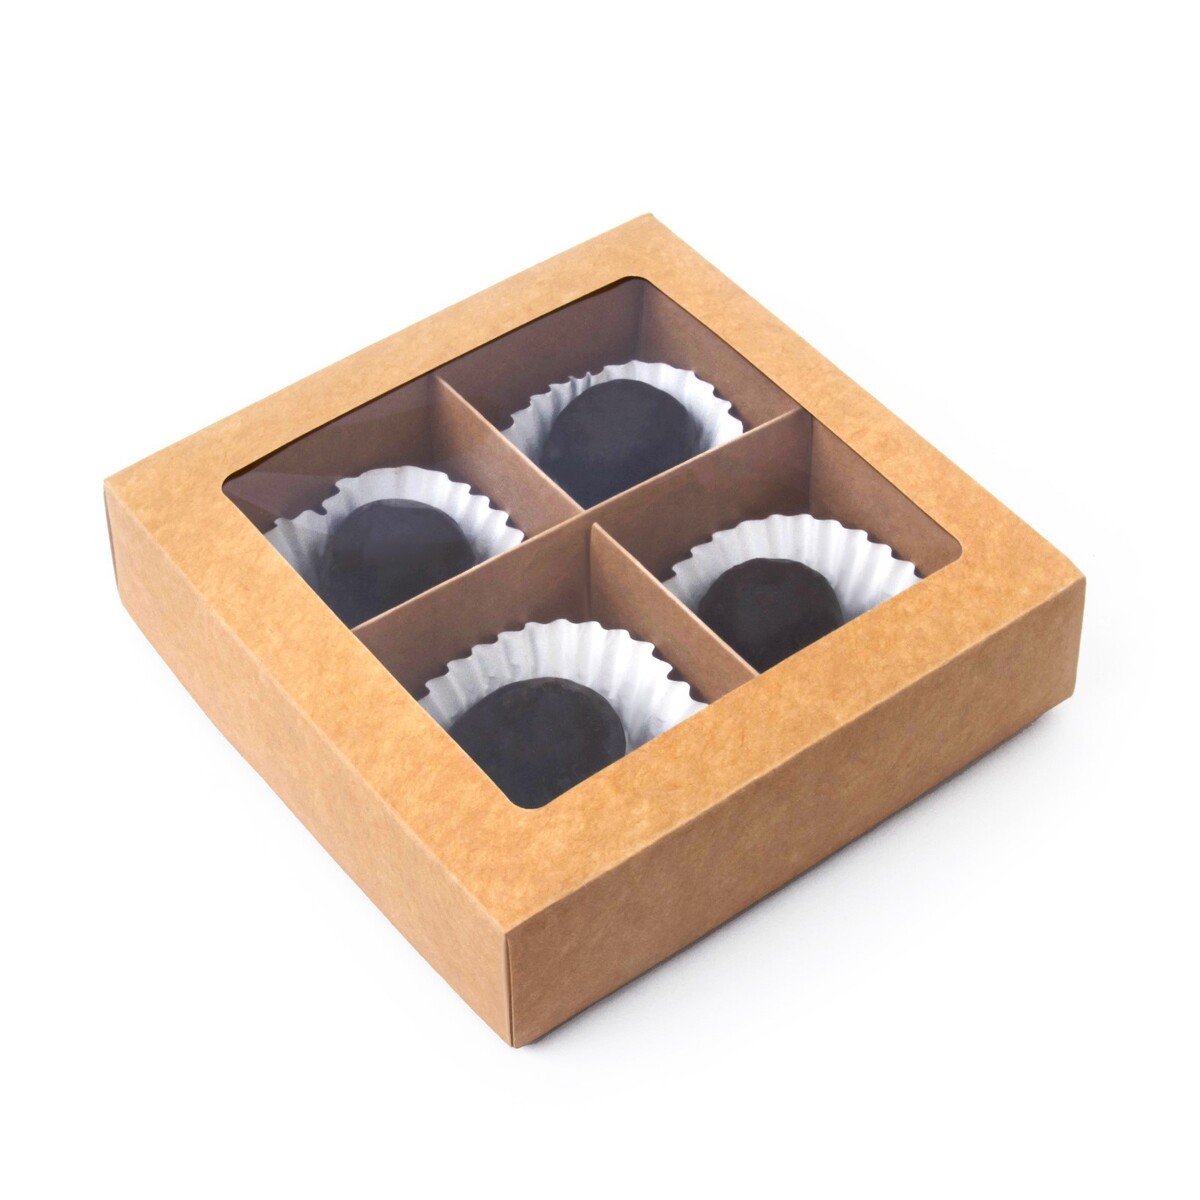 Коробка складная под 4 конфеты с окном, крафт, 12.6 х 12.6 х 3.5 см коробка складная под 2 конфеты крафт 5 х 10 5 х 3 5 см